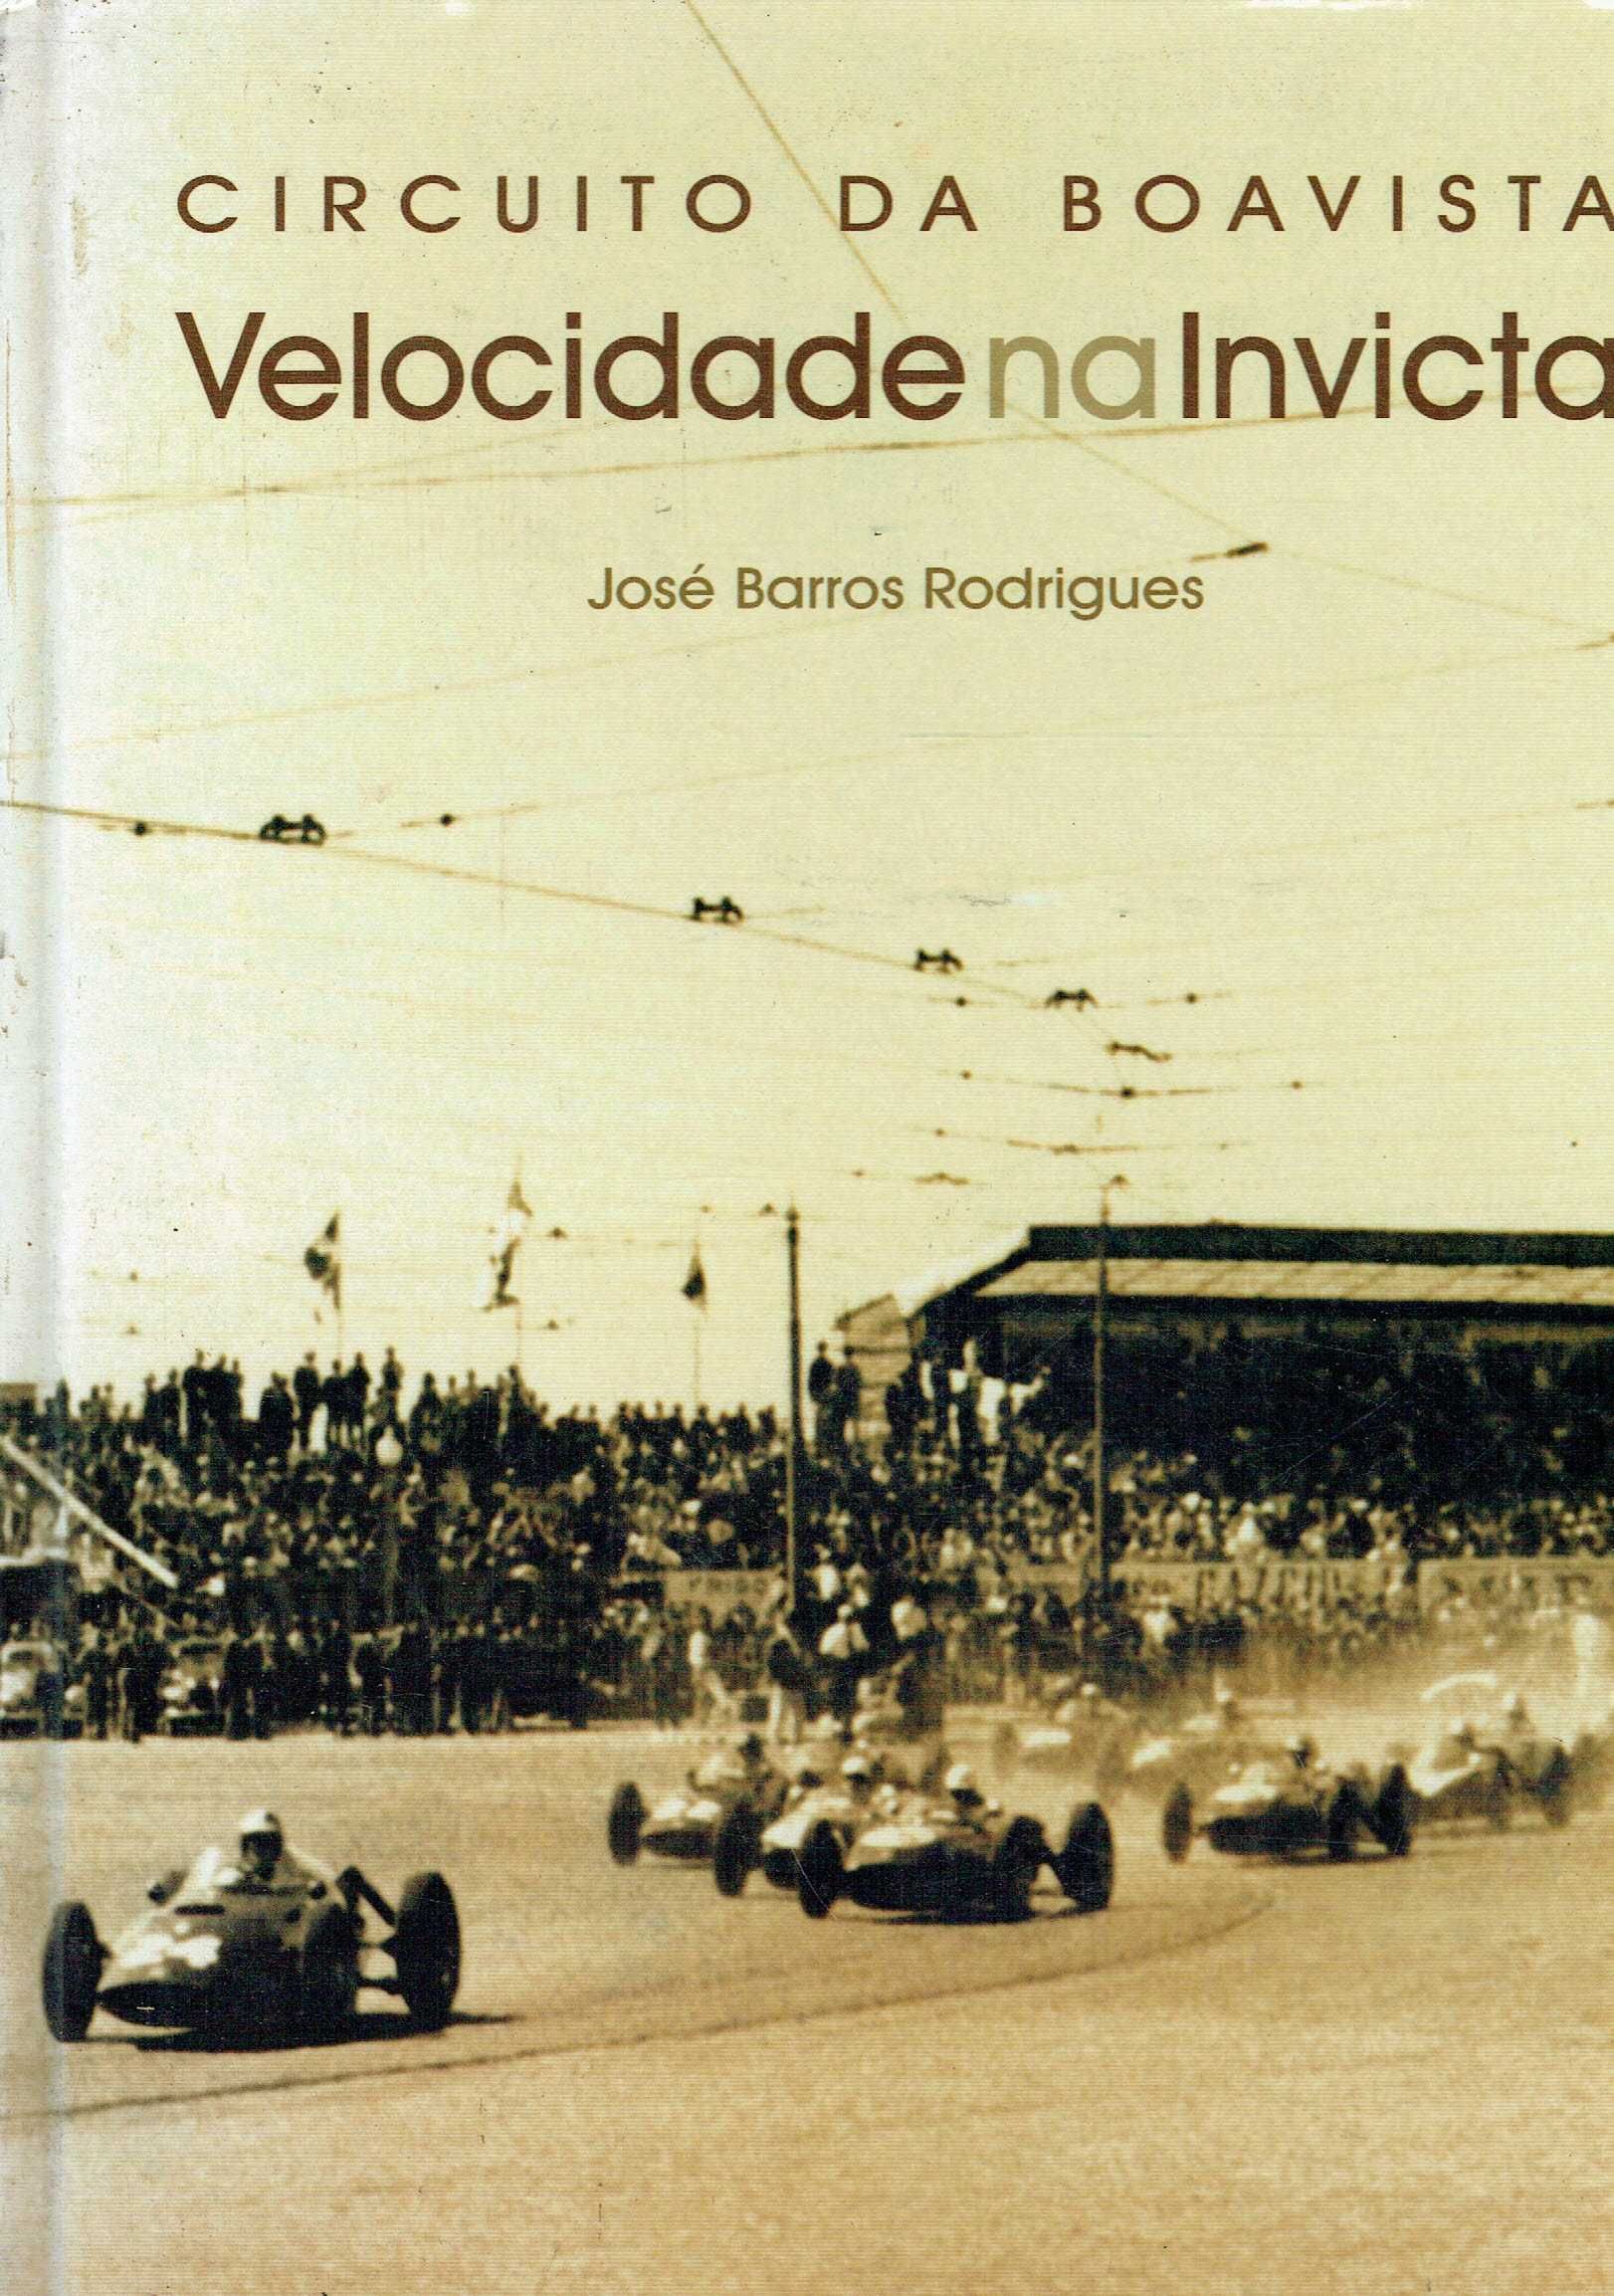 7331

Circuito da Boavista

de Jose Barros Rodrigues